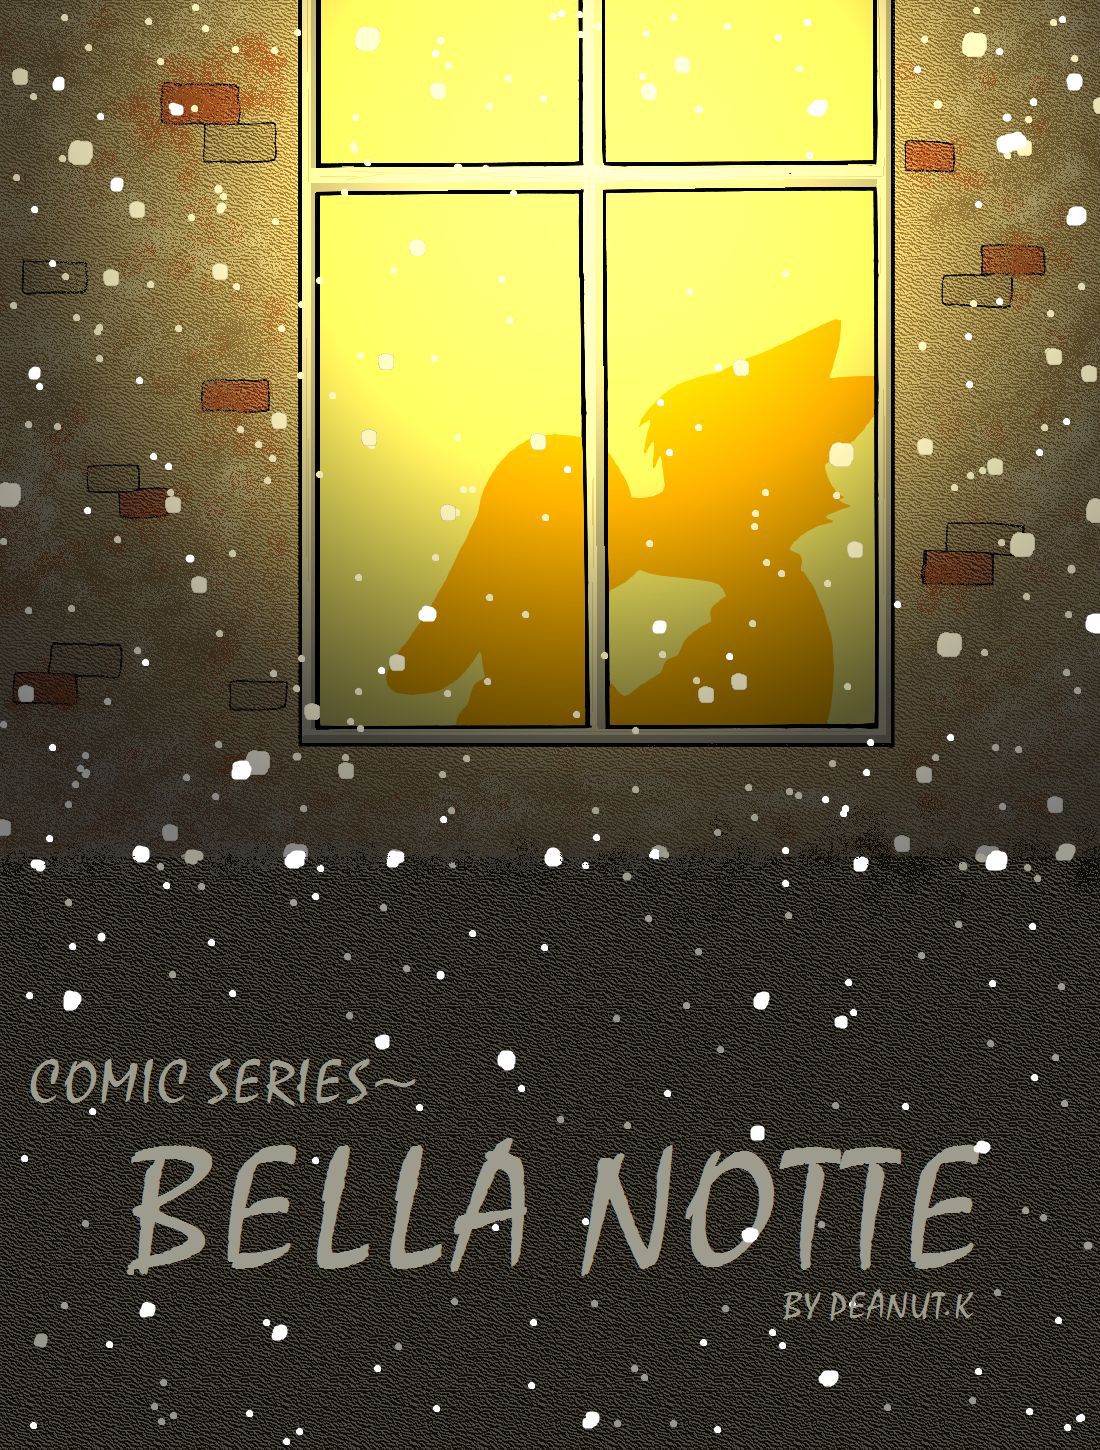 [Peanut-K] Bella Notte (Zootopia) (English) [On Going] http://peanut-k.tumblr.com/ 1